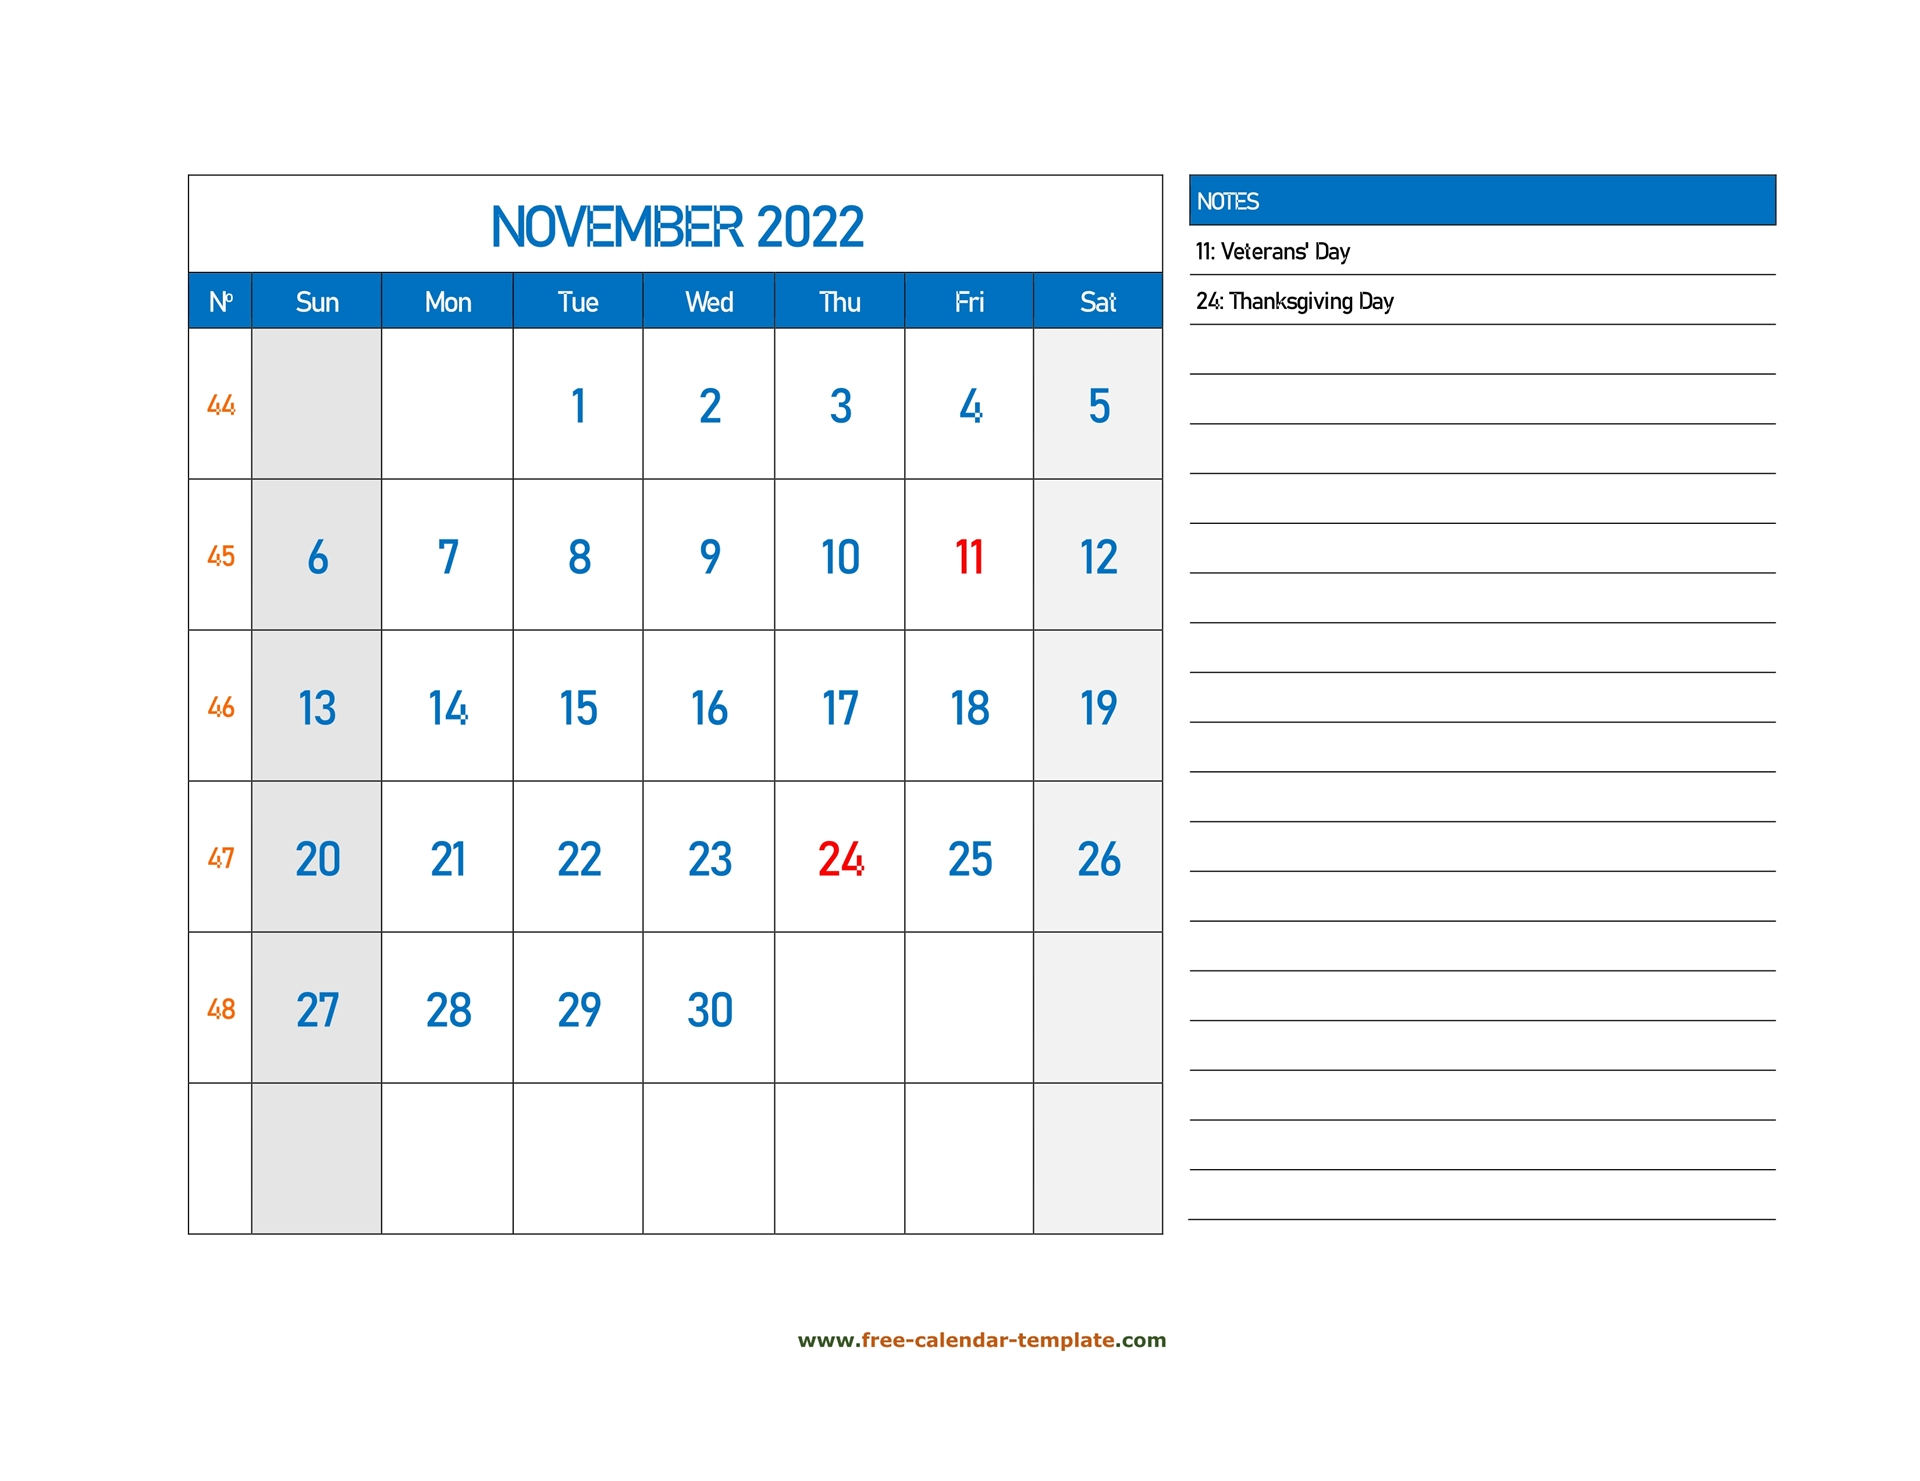 December 2022 Calendar: November